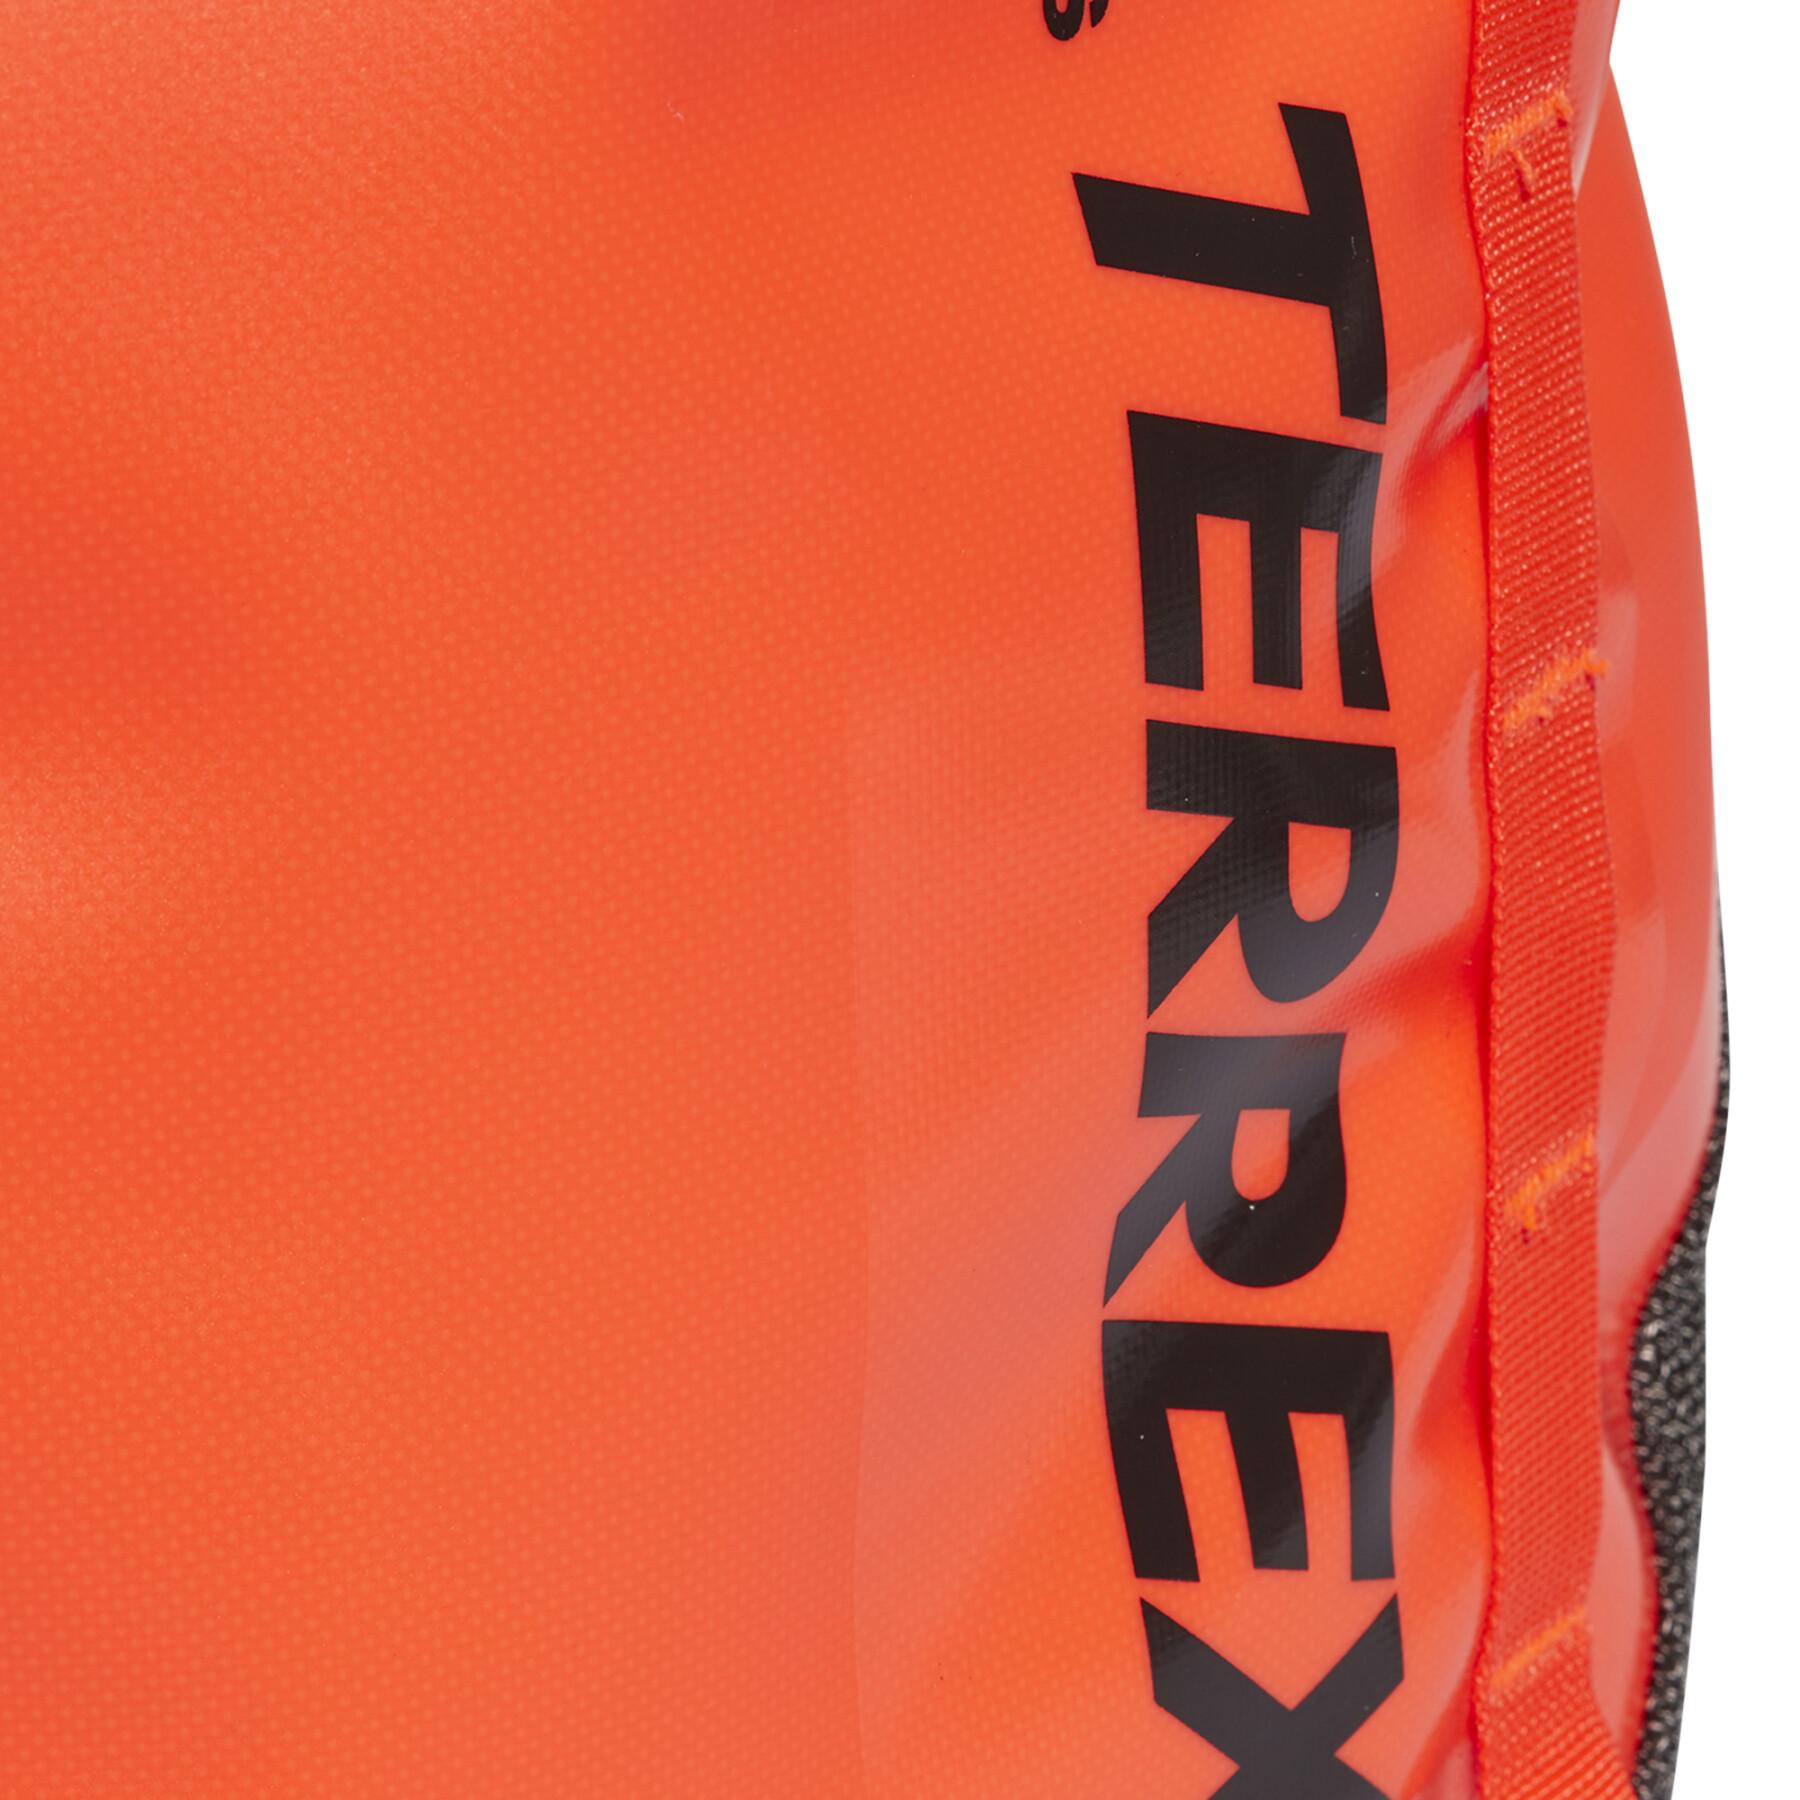 Backpack adidas Terrex HB 40